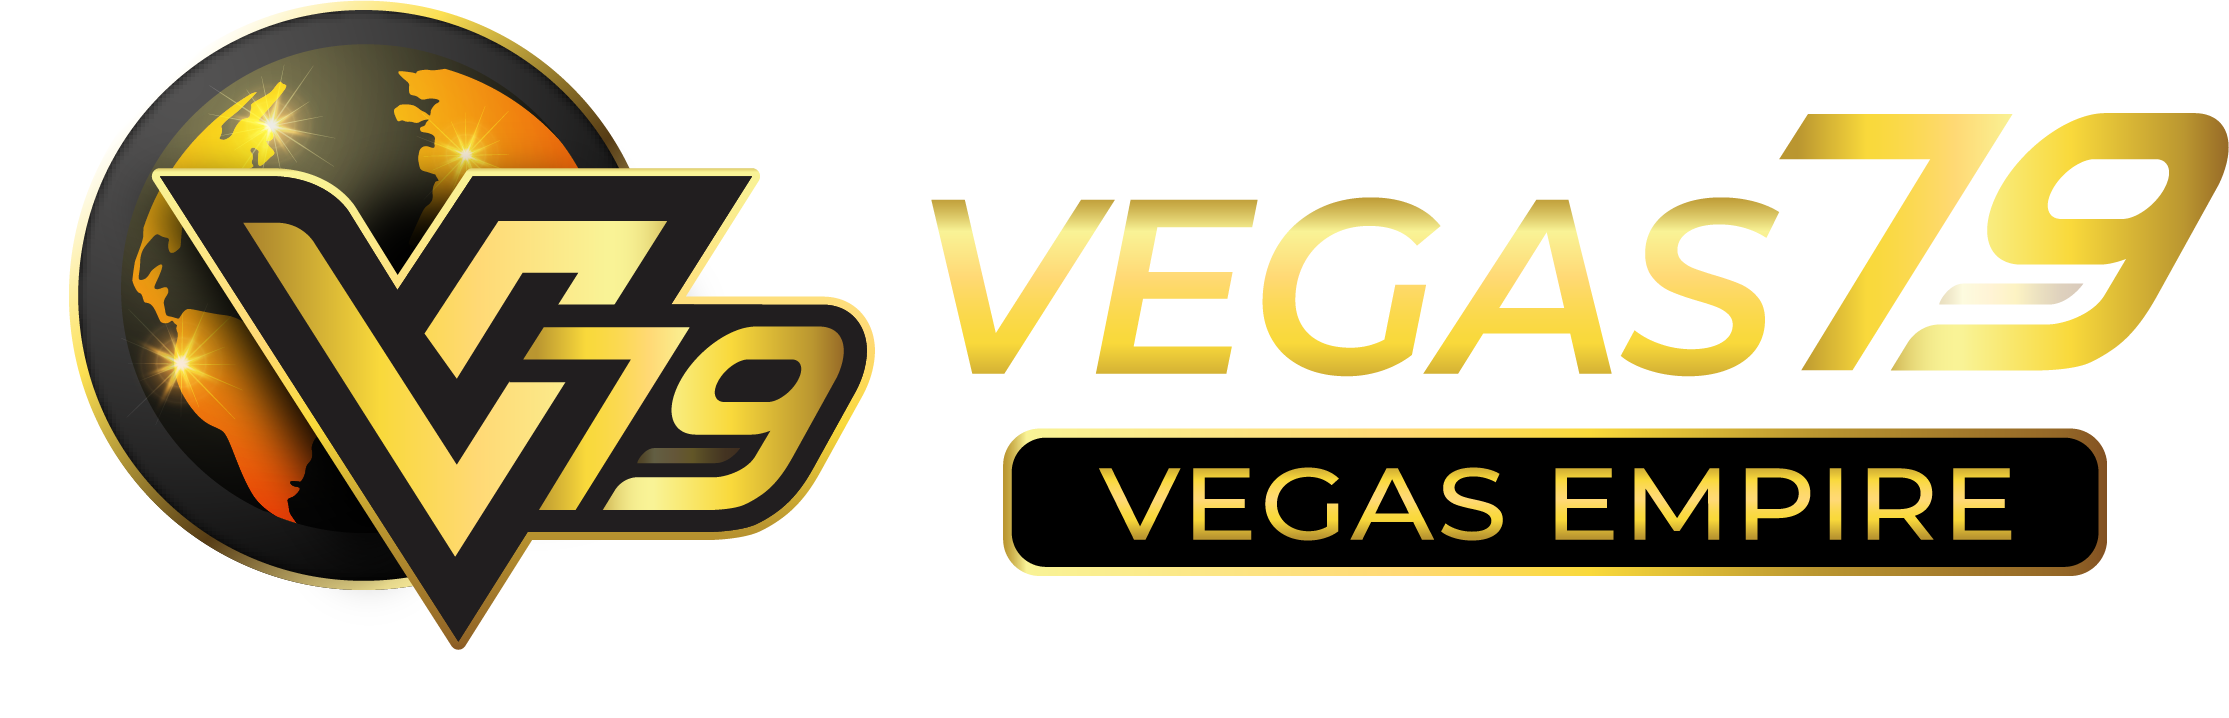 Vegas79.best